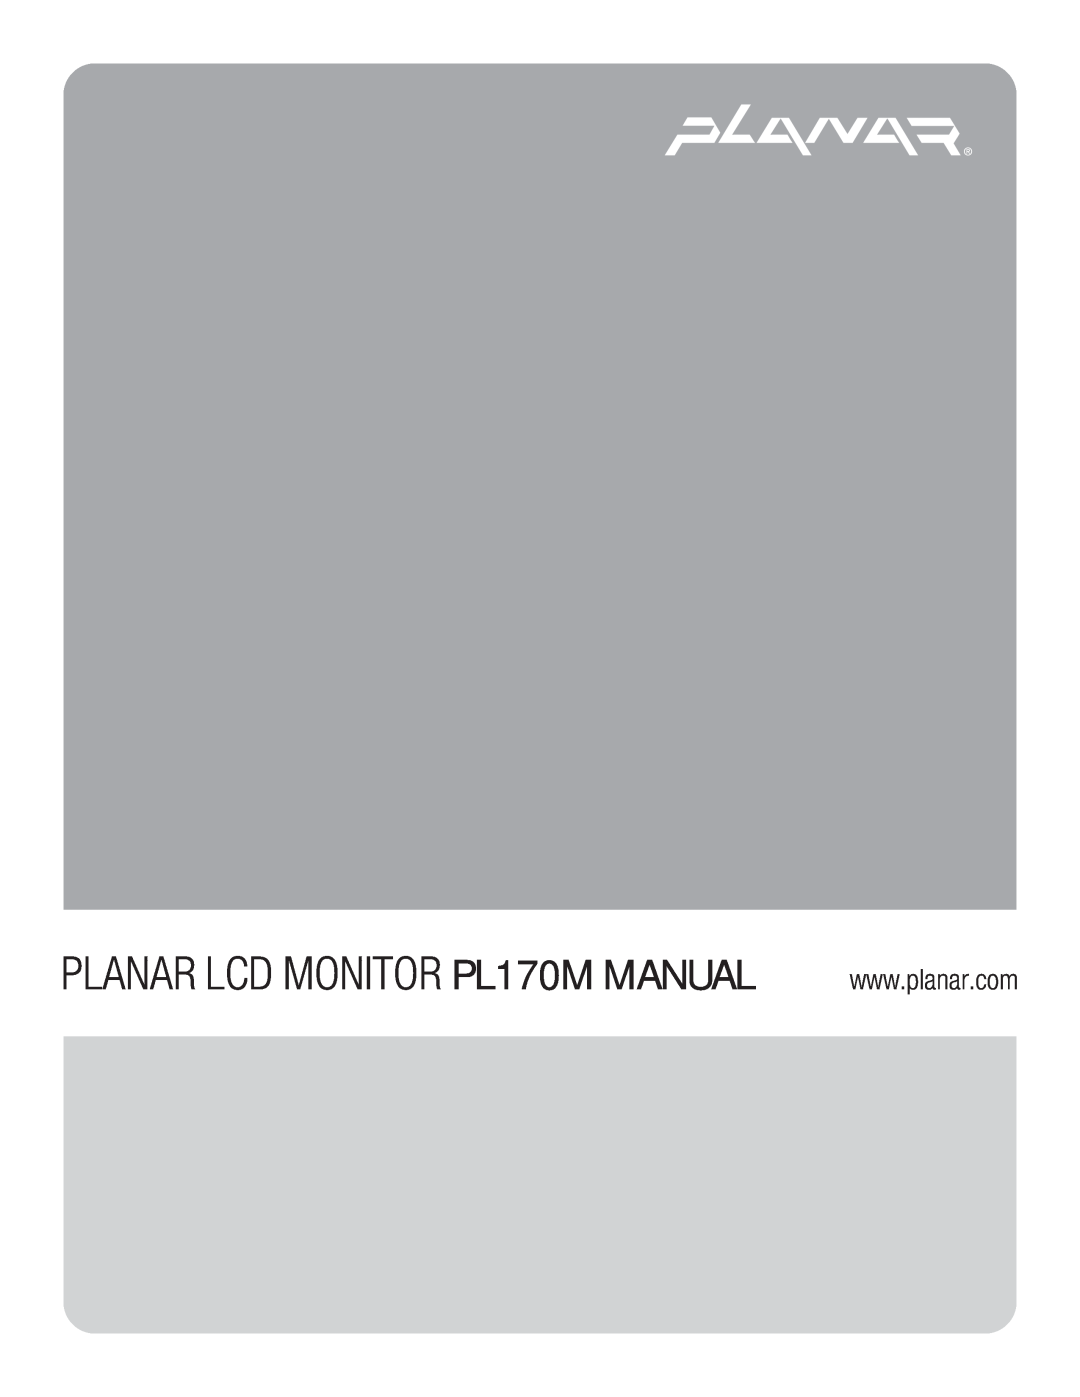 Planar manual PLANAR LCD MONITOR PL170M MANUAL 